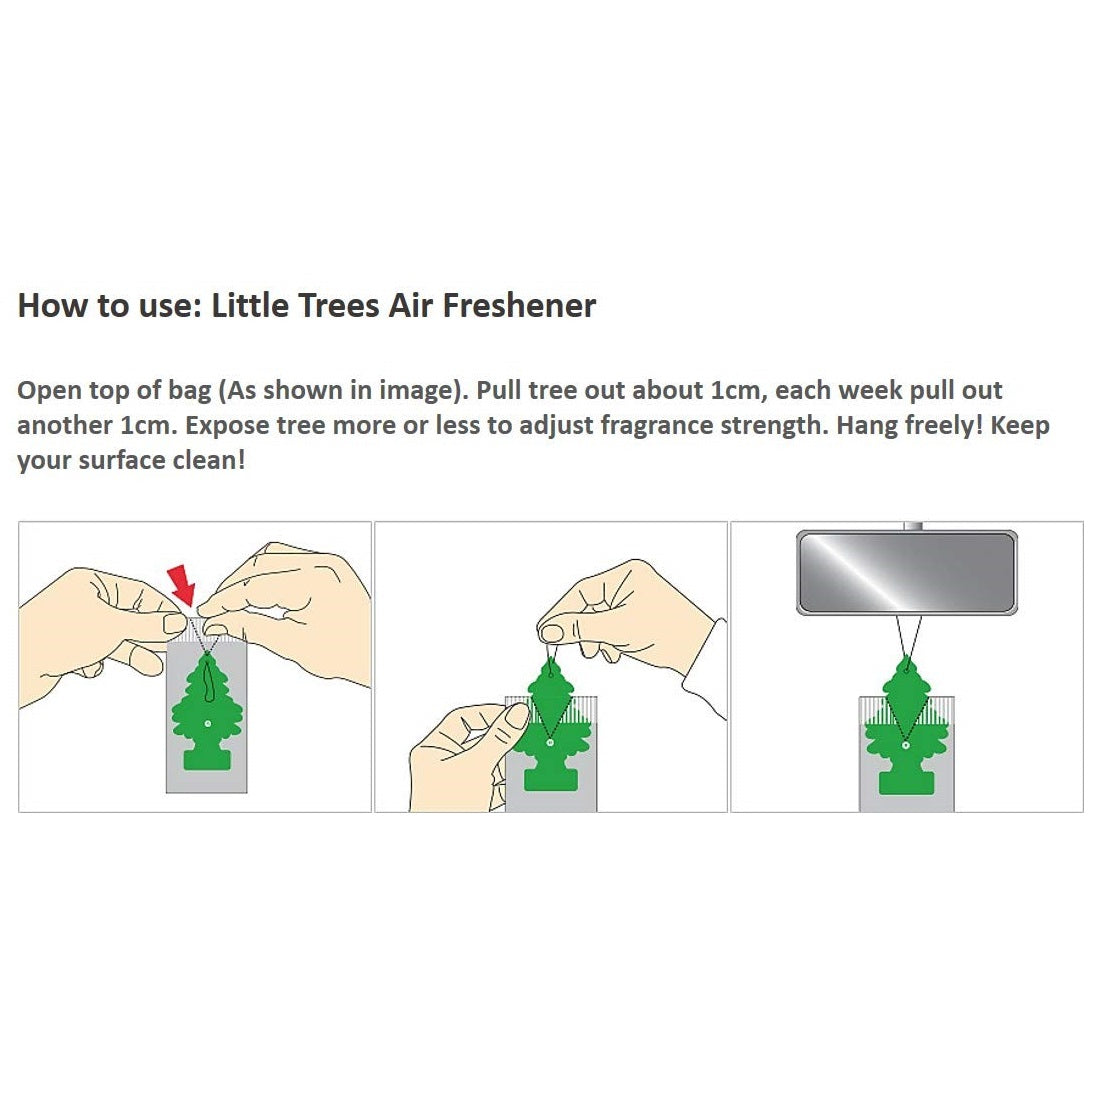 Little Trees Car Air Freshener - Watermelon - 3 pieces